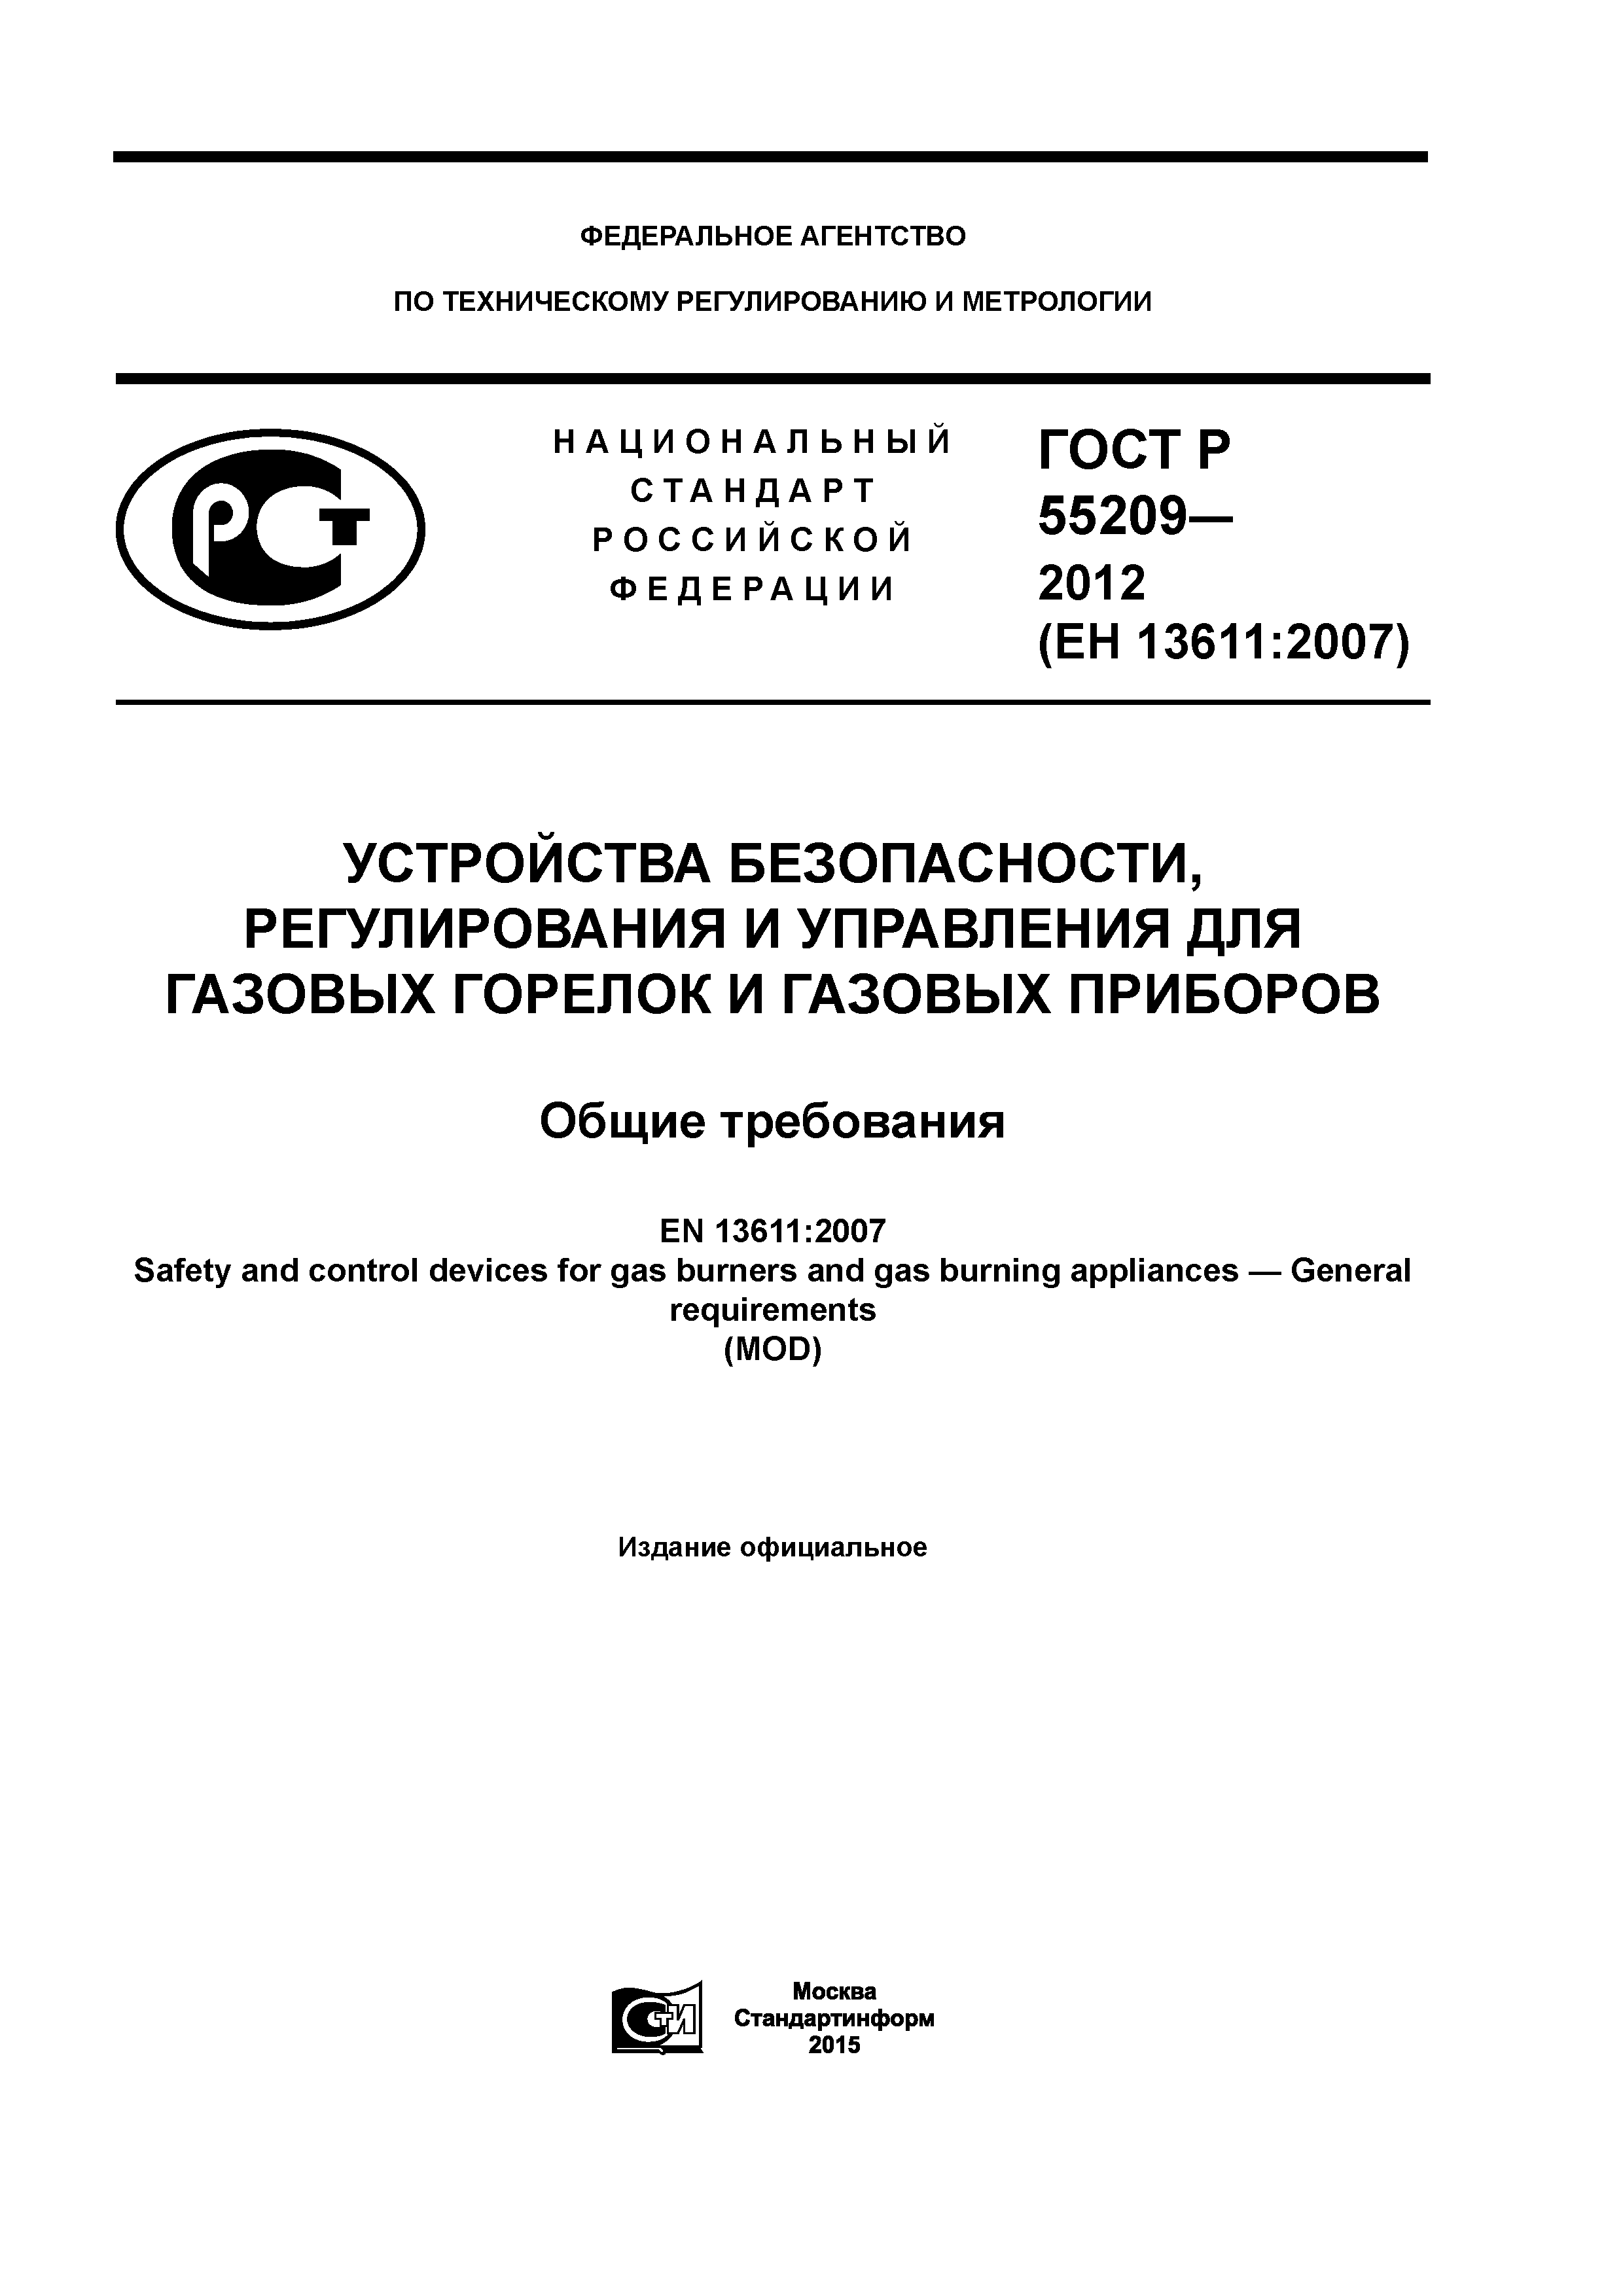 ГОСТ Р 55209-2012